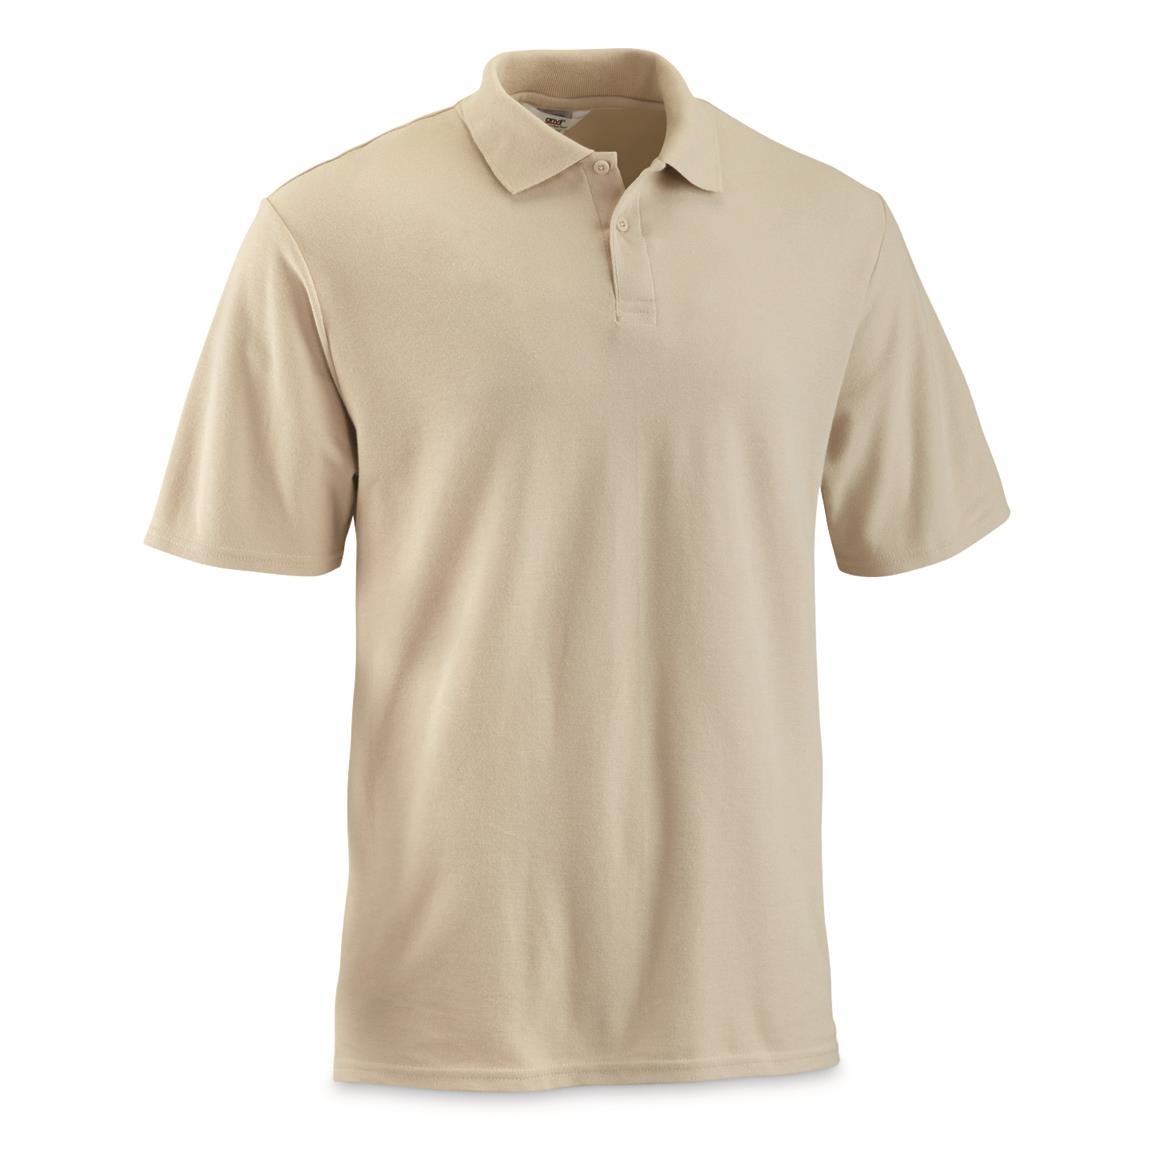 U.S. Municipal Surplus Tactical Short Sleeve Polo Shirts, 2 Pack, New, Tan